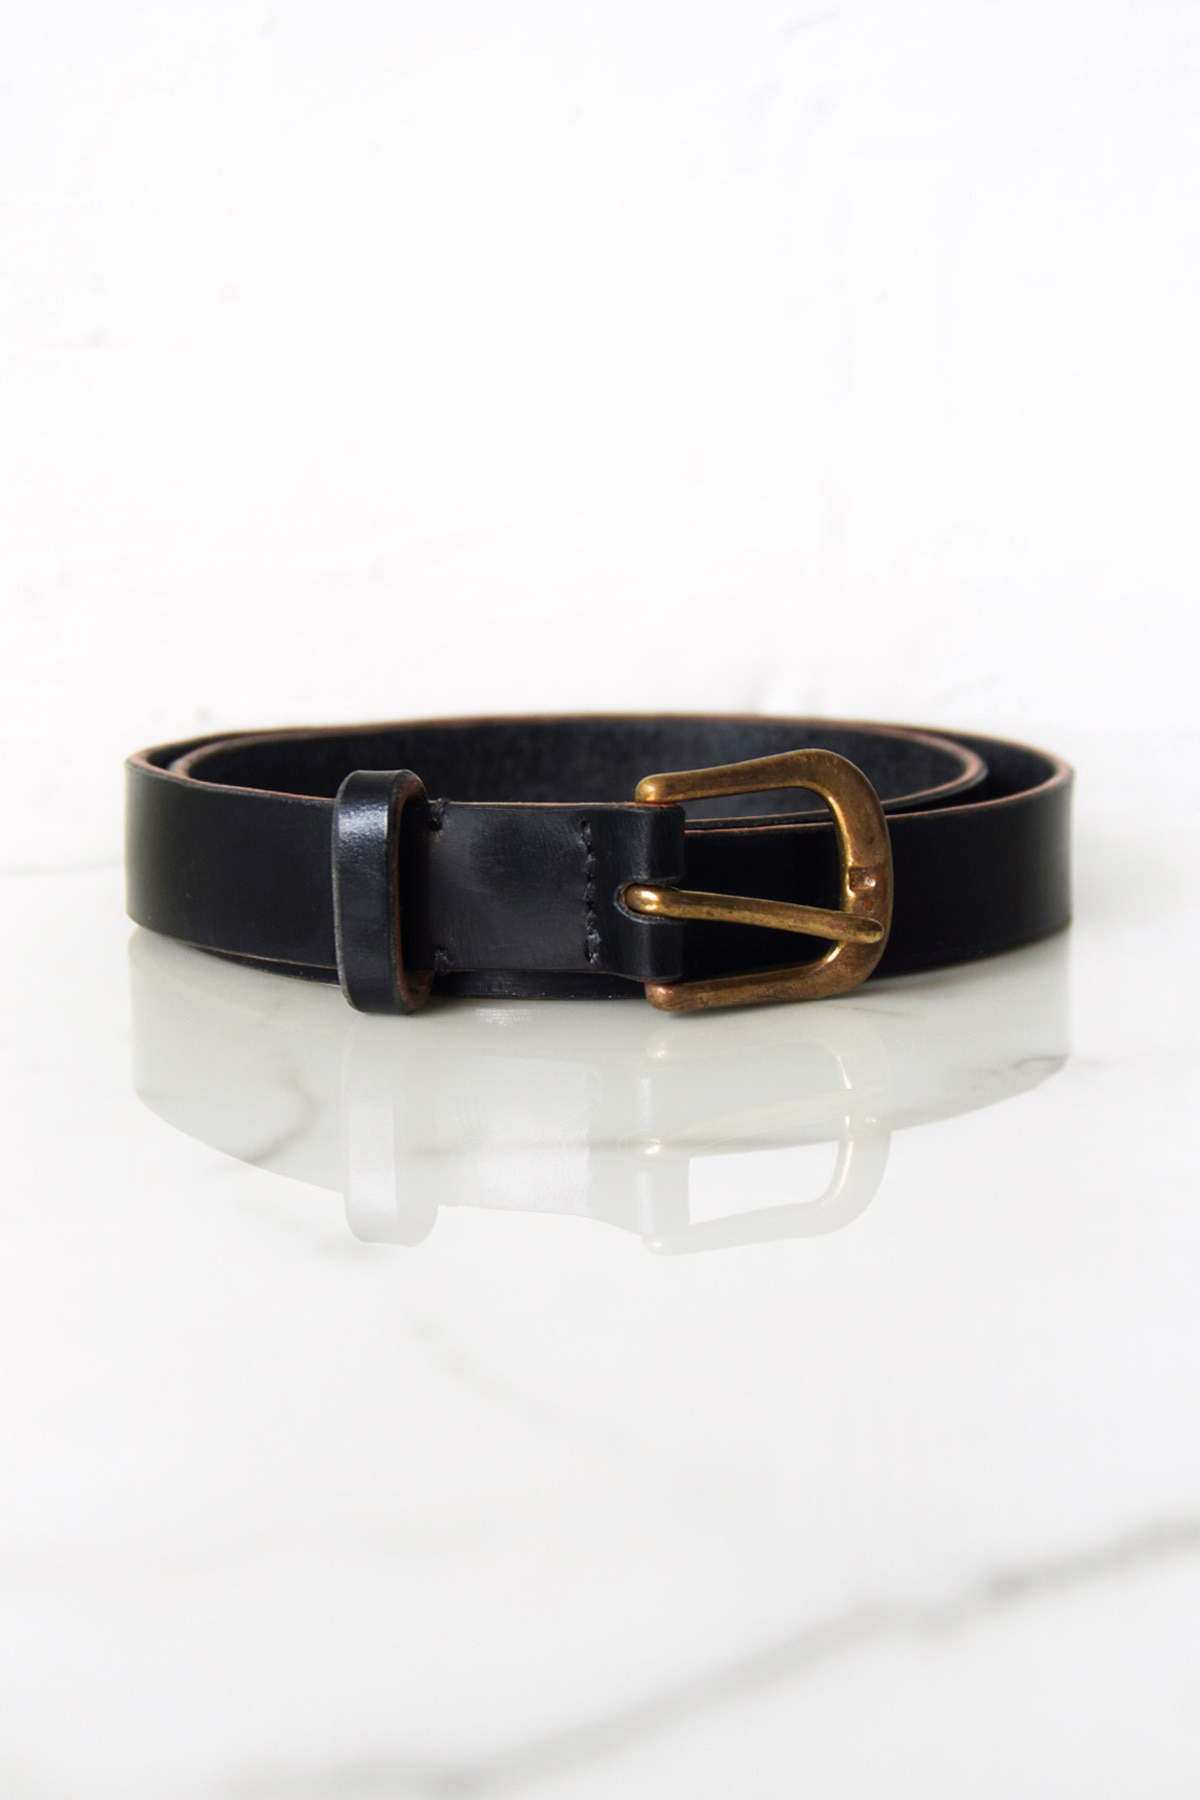 [GAJIROC] 1“ Black Bridle Leather Belt